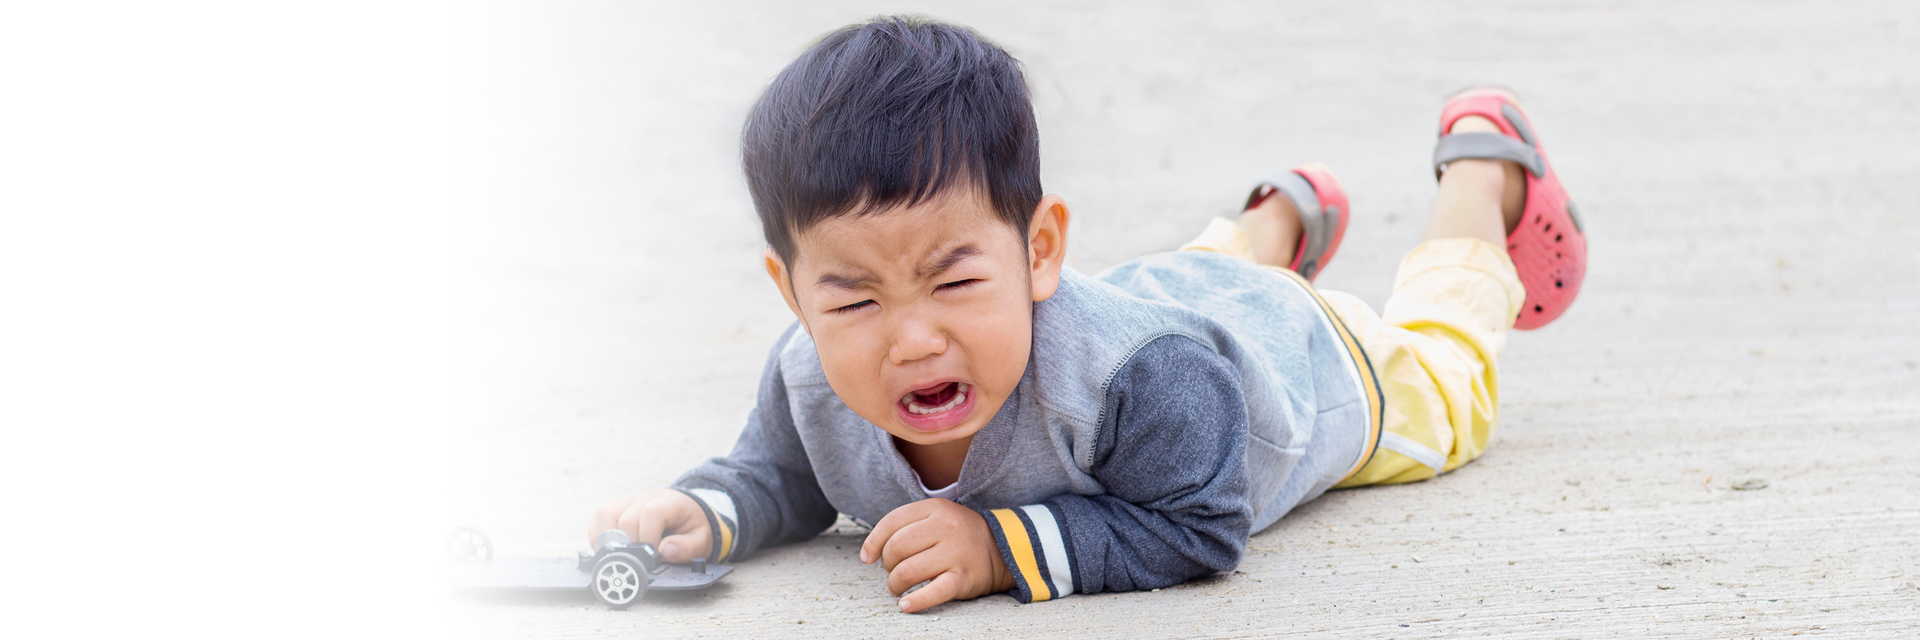 Toddler boy having a temper tantrum